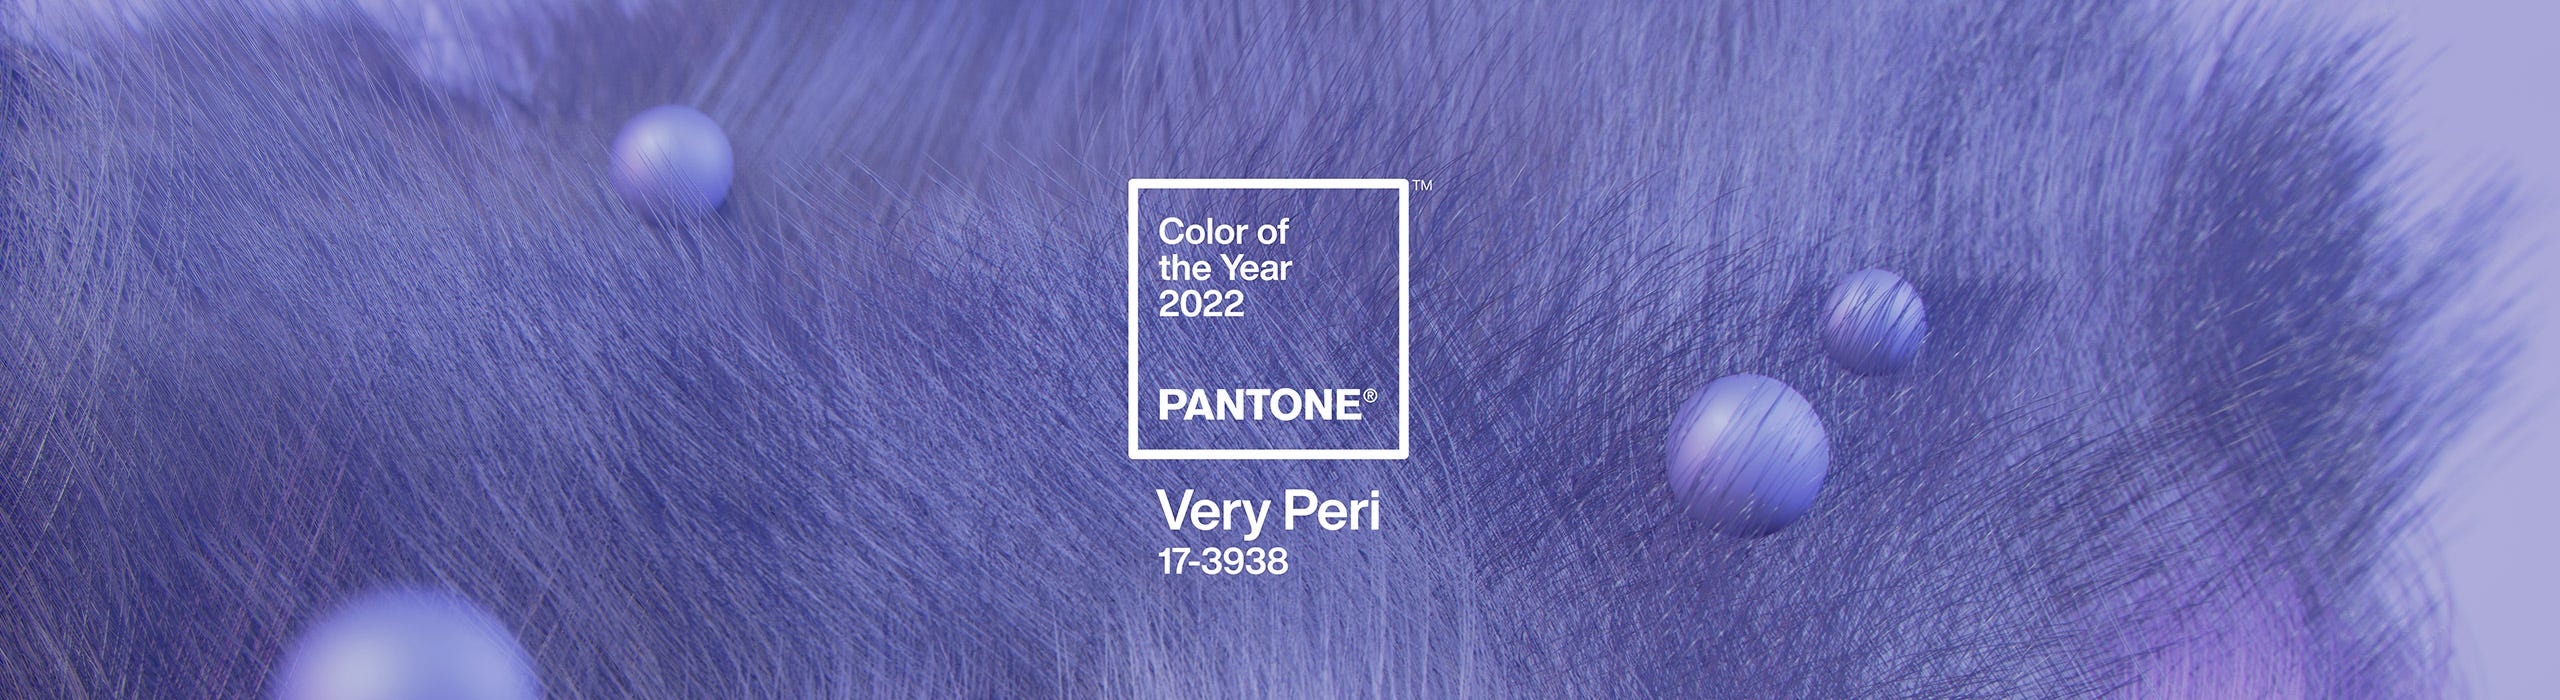 PANTONE 17-3938 Very Peri pour 2022 2